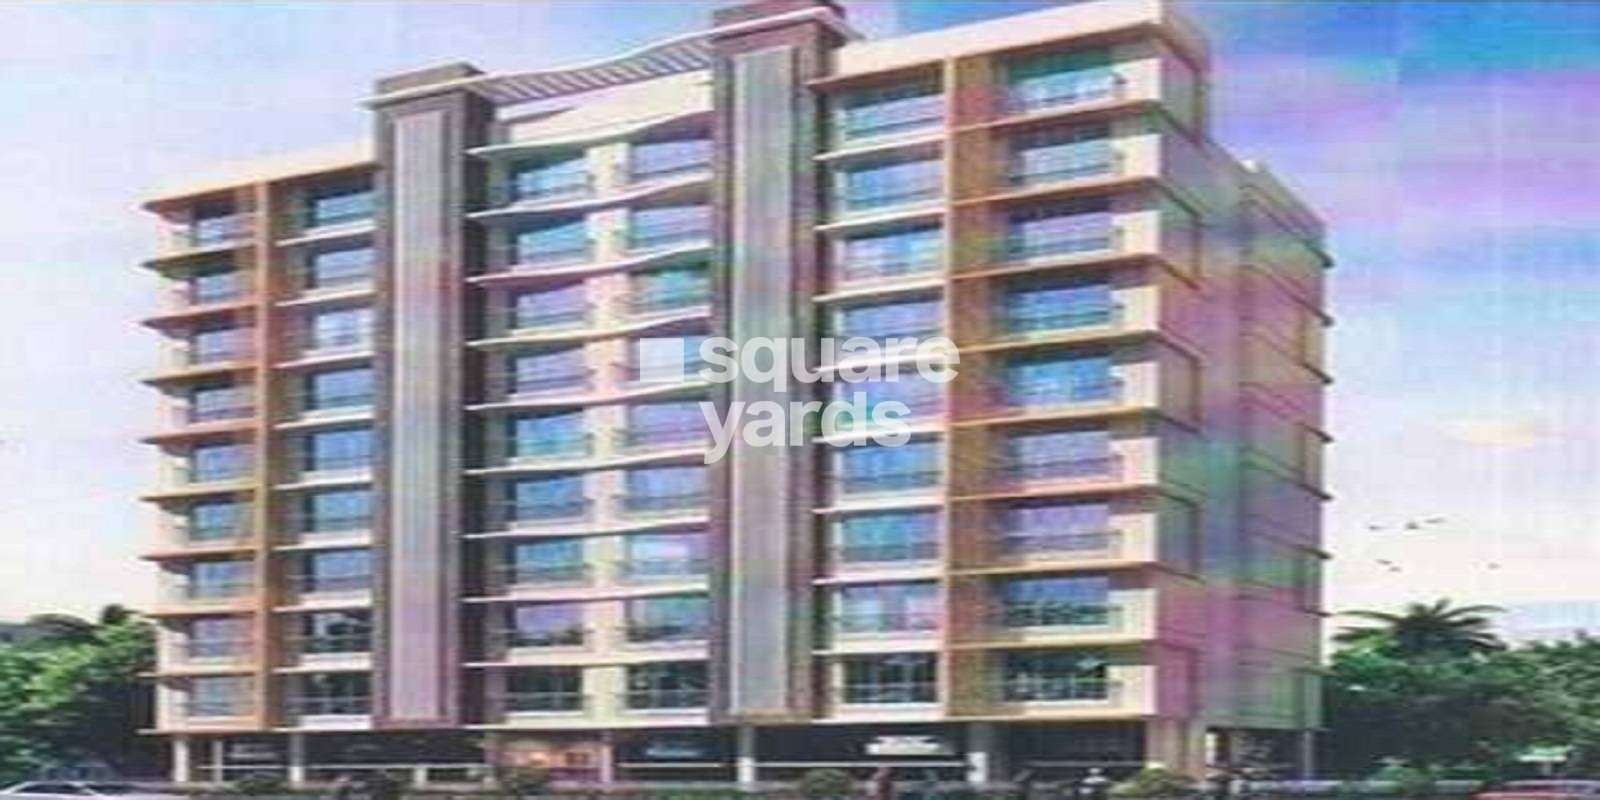 Mandapeshwar Apartments Cover Image